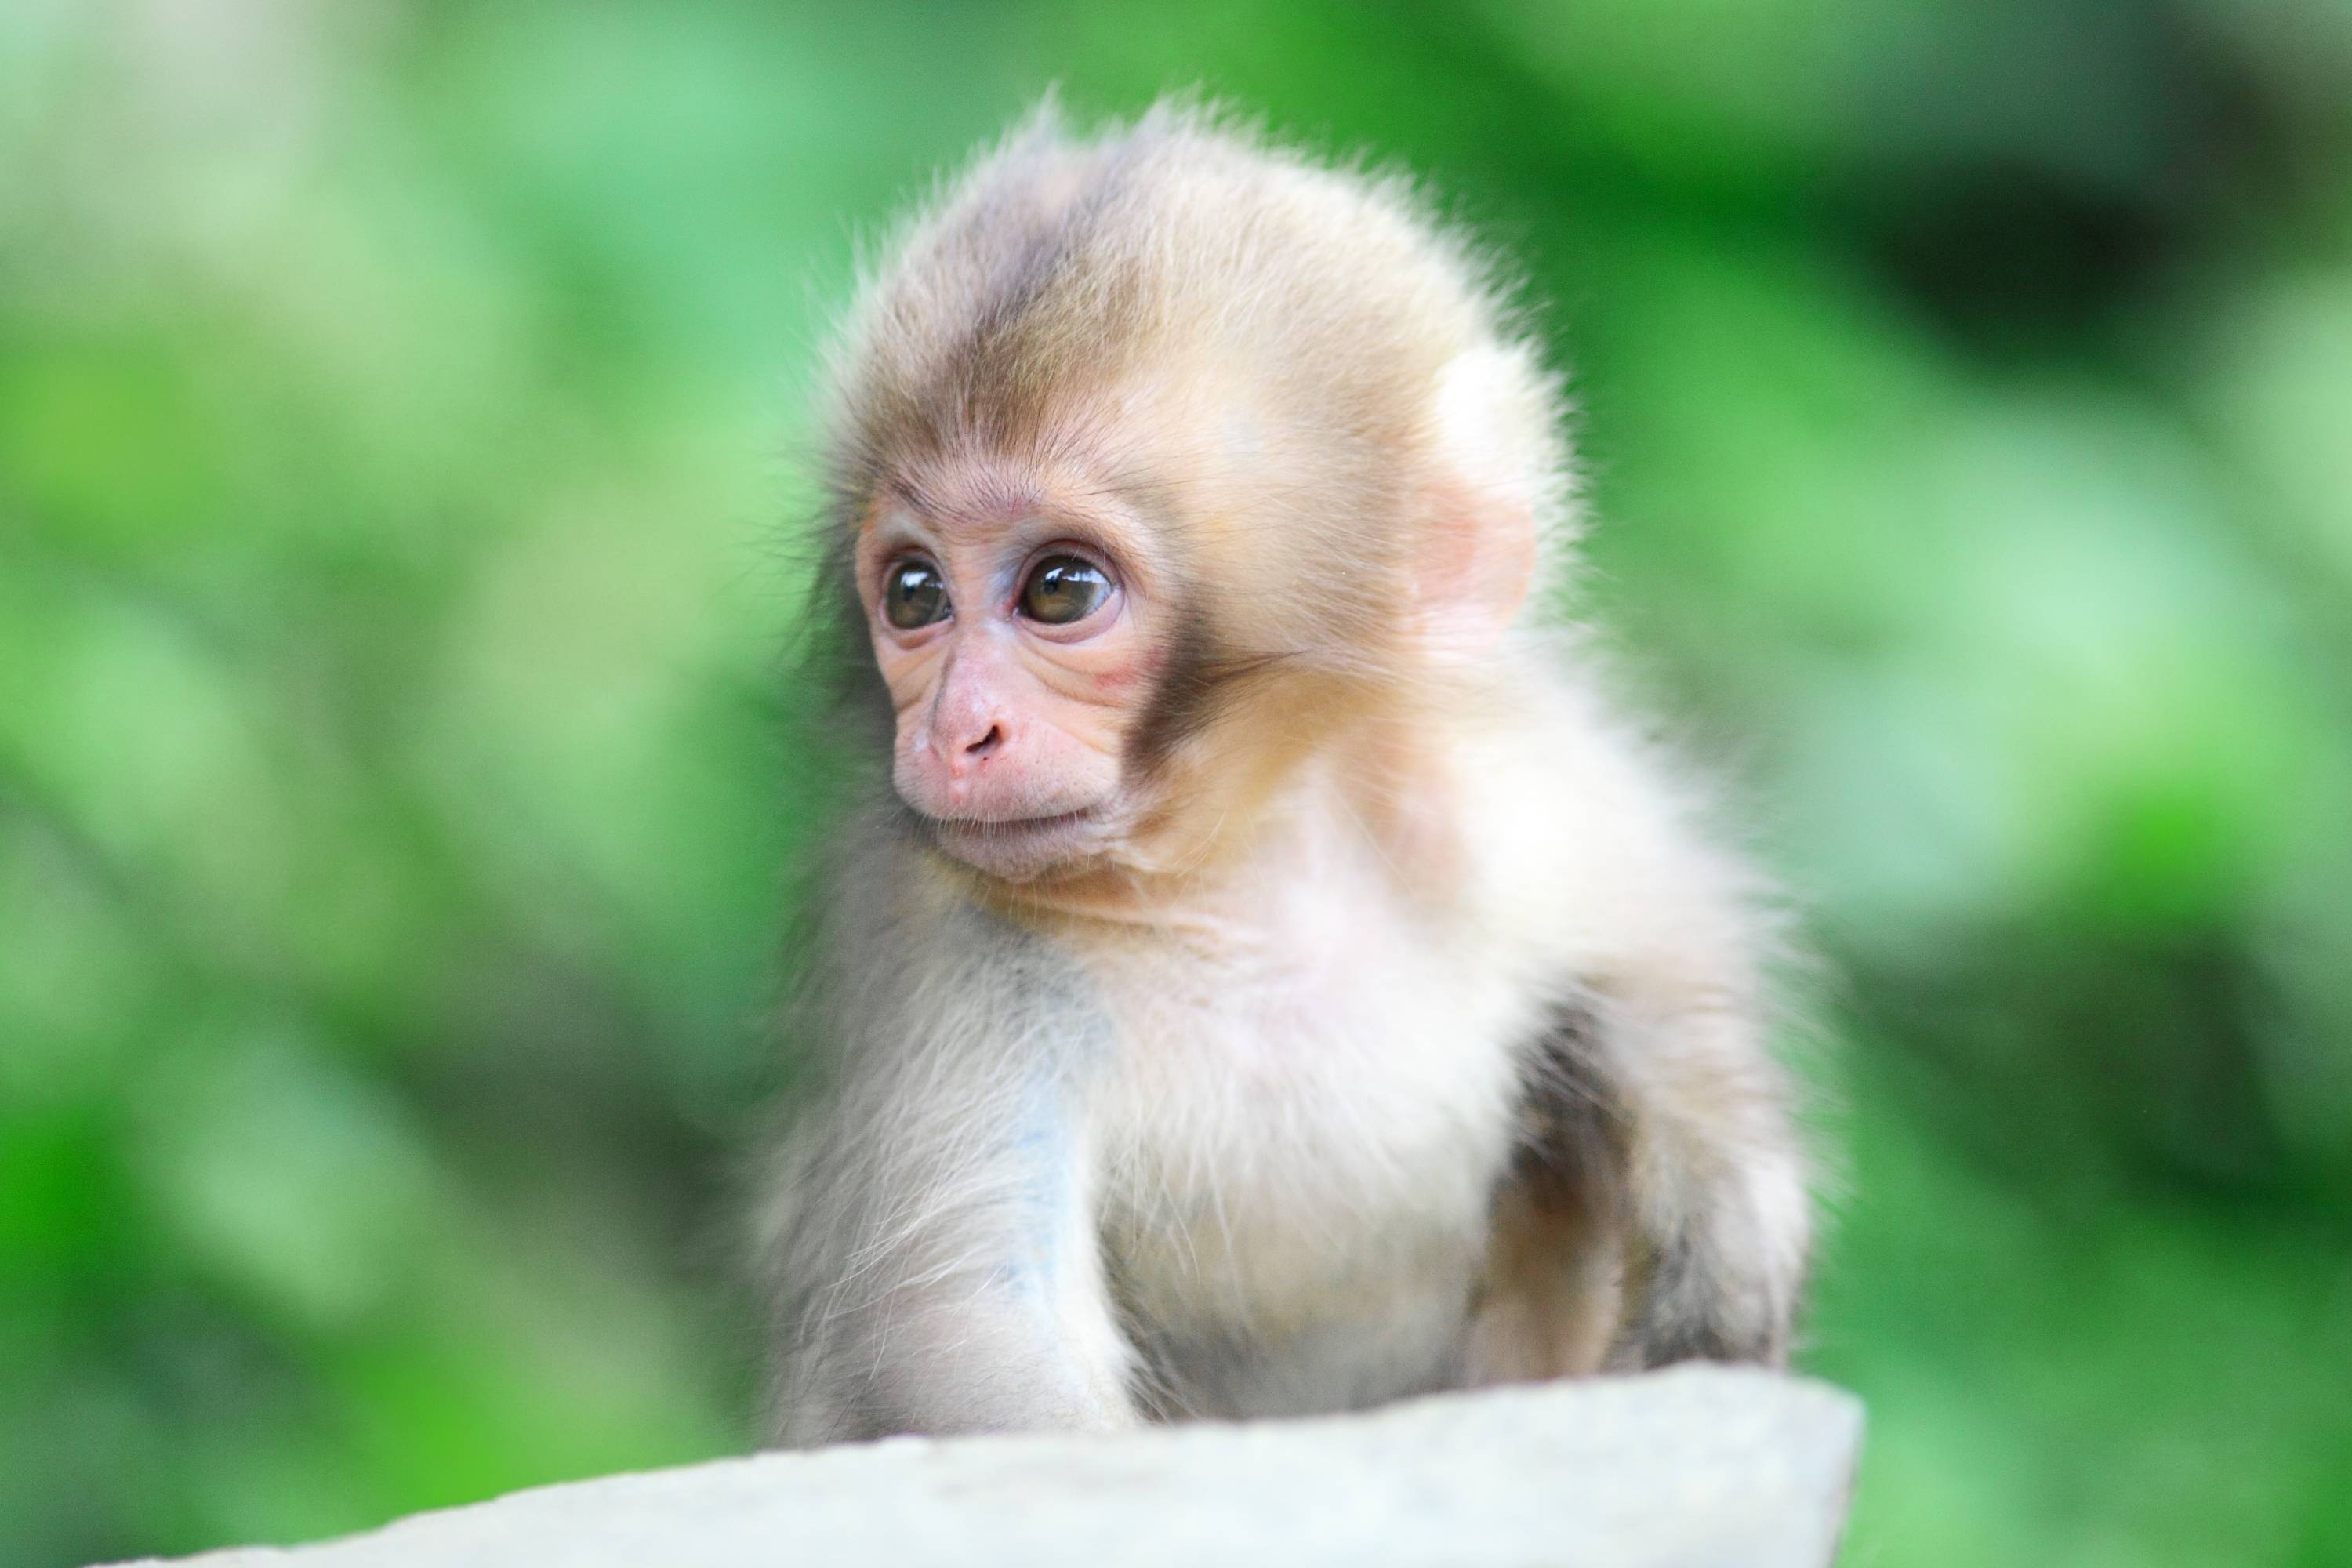 Monkey, baby monkey, cute wallpapers, adorable animal, 3000x2000 HD Desktop